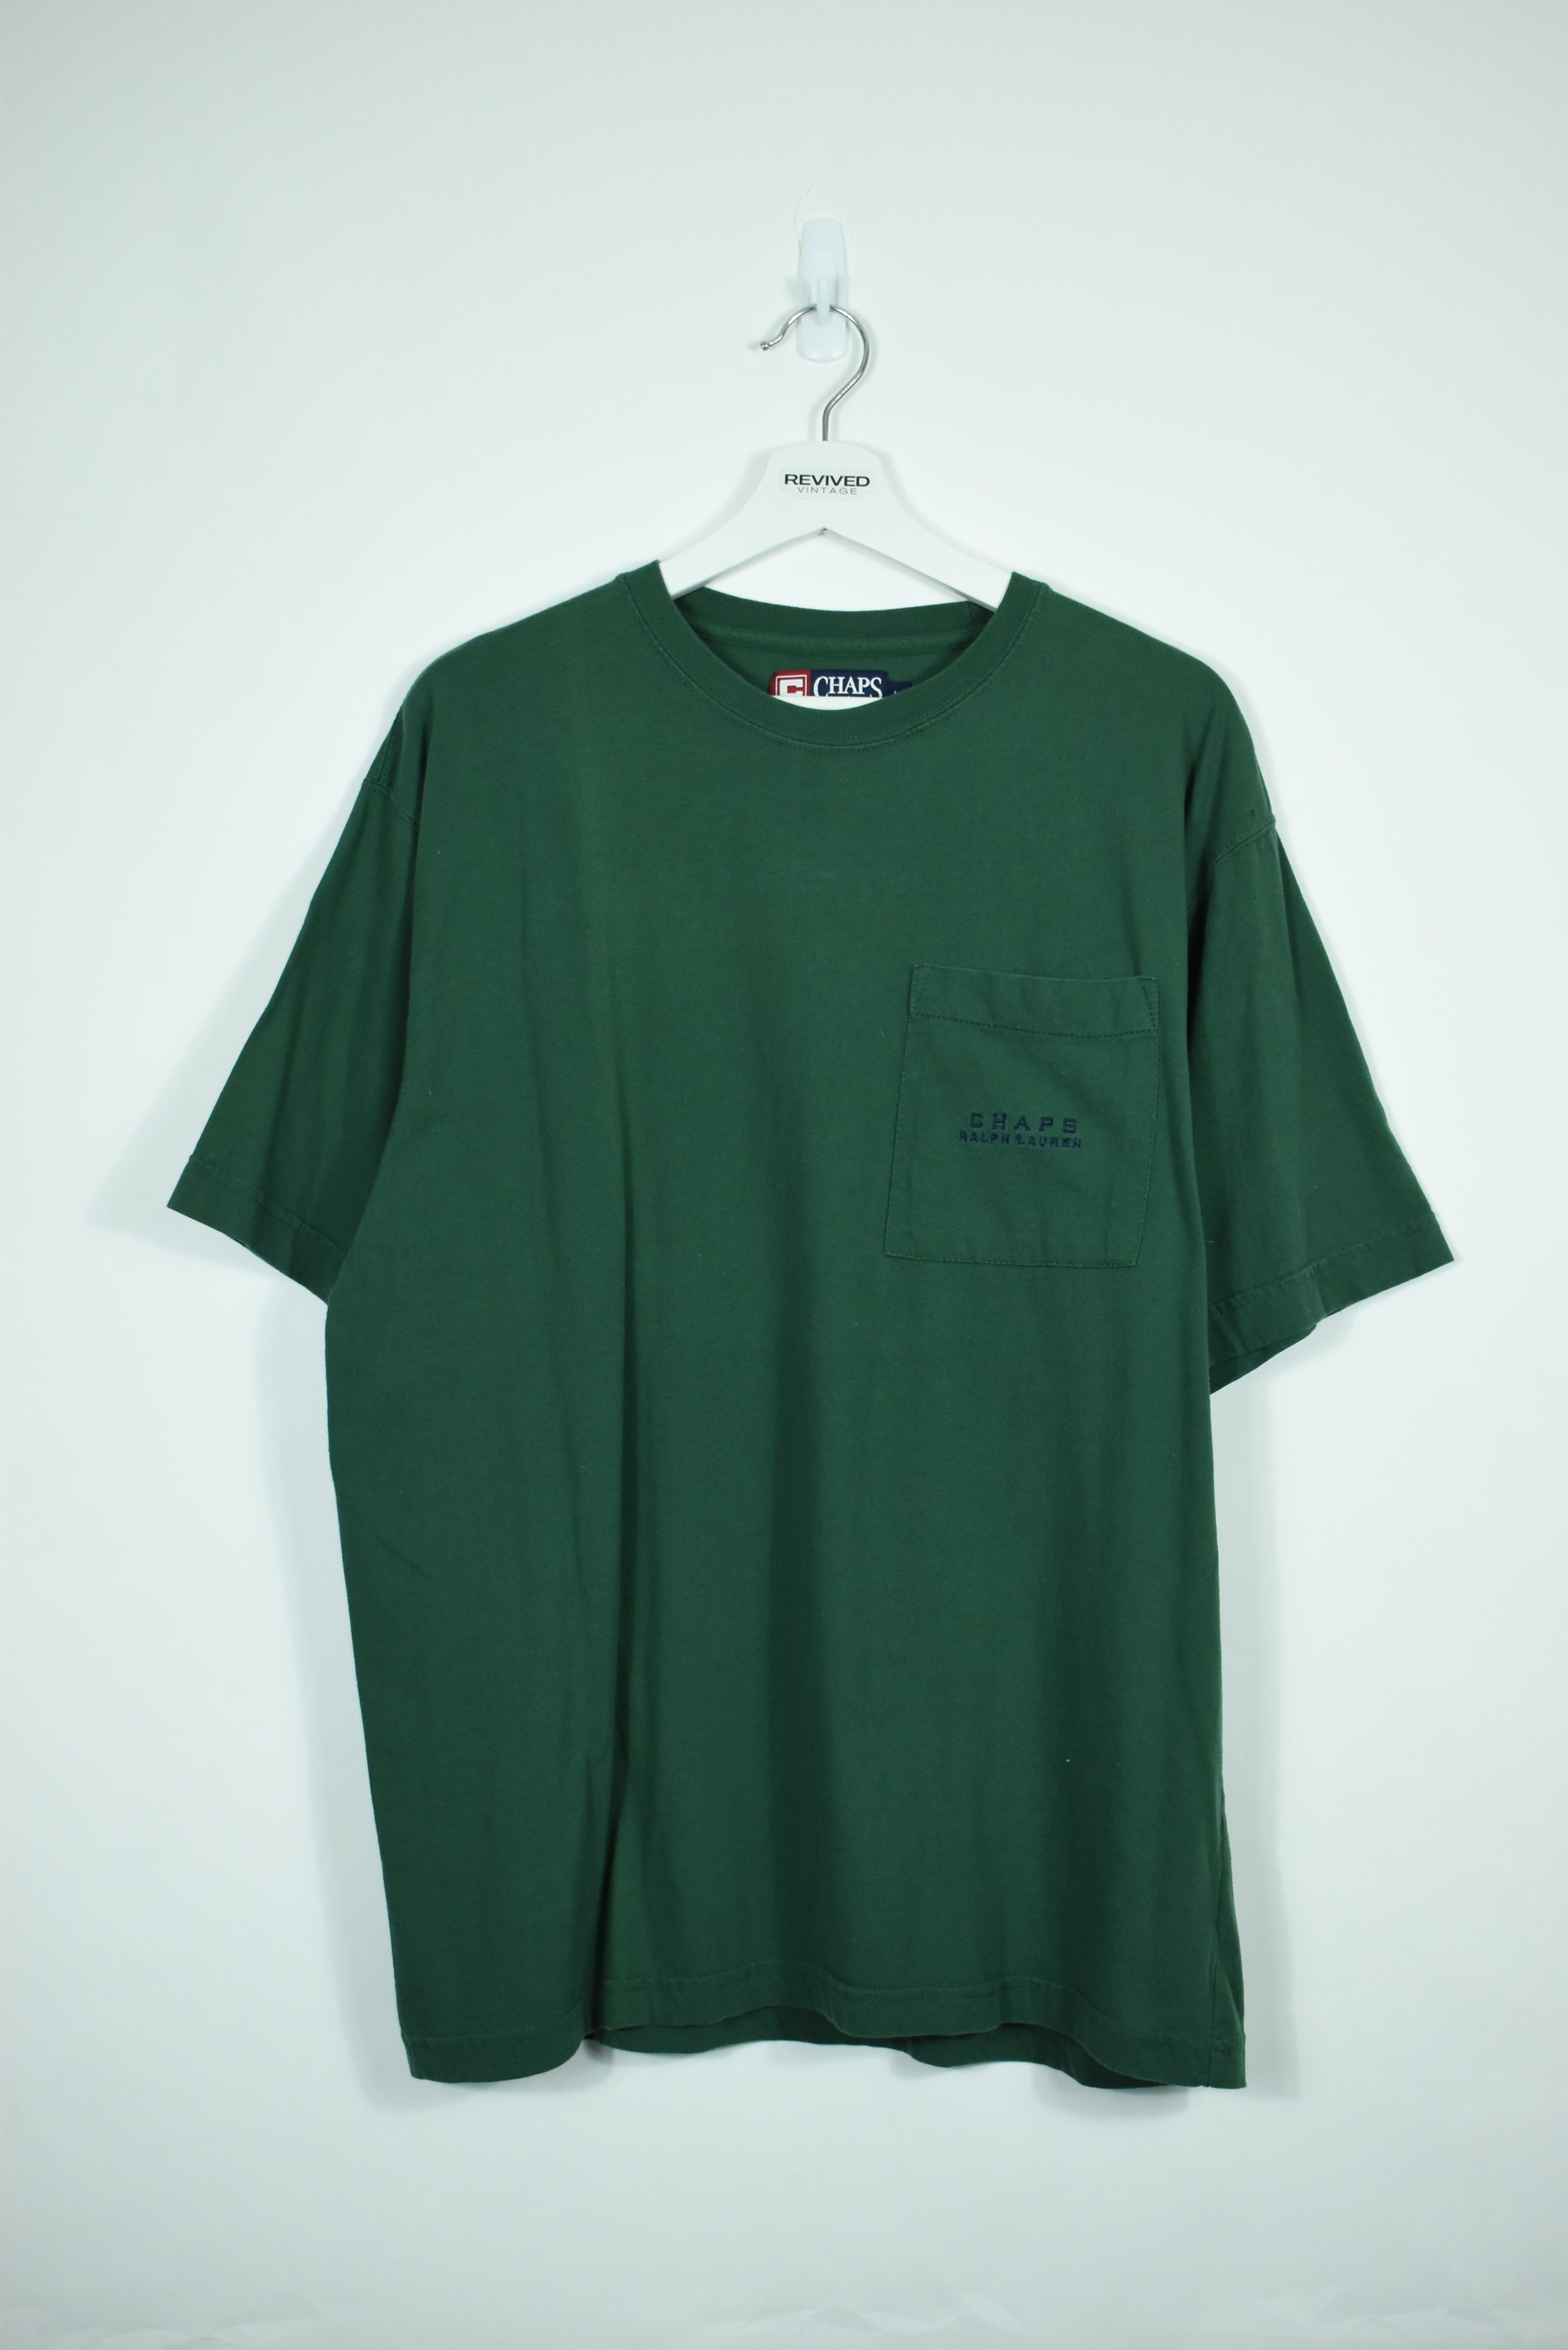 Vintage Chaps Ralph Lauren Forrest Green Pocket T Shirt Large